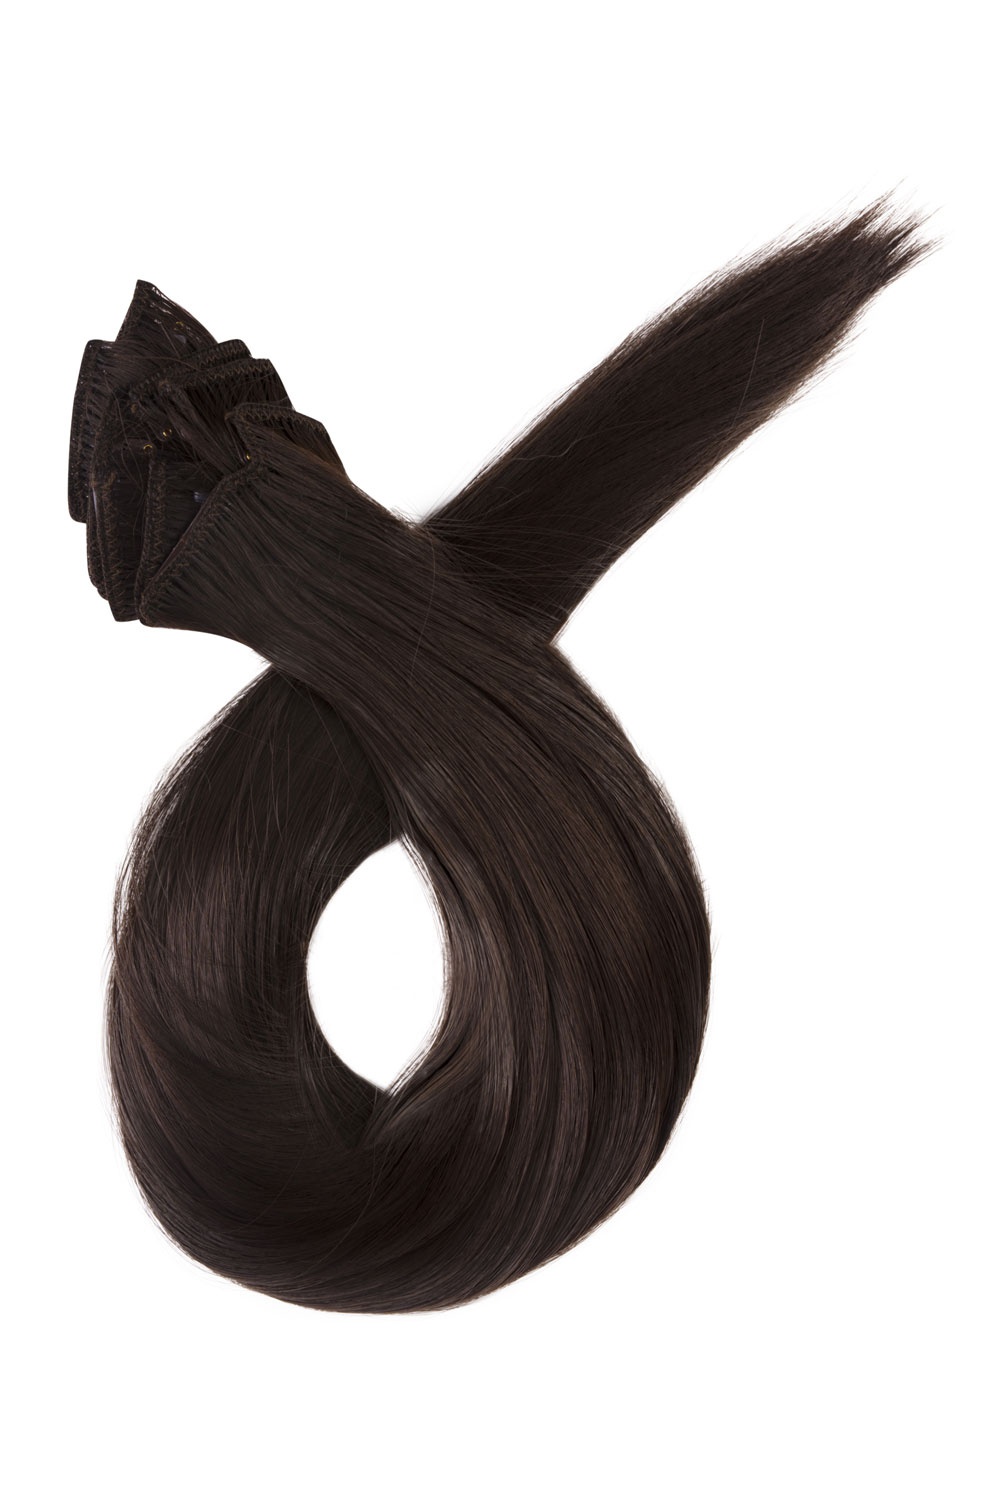 Gaštanovo hnedé clip in vlasy, 70cm, 180g, farba 6